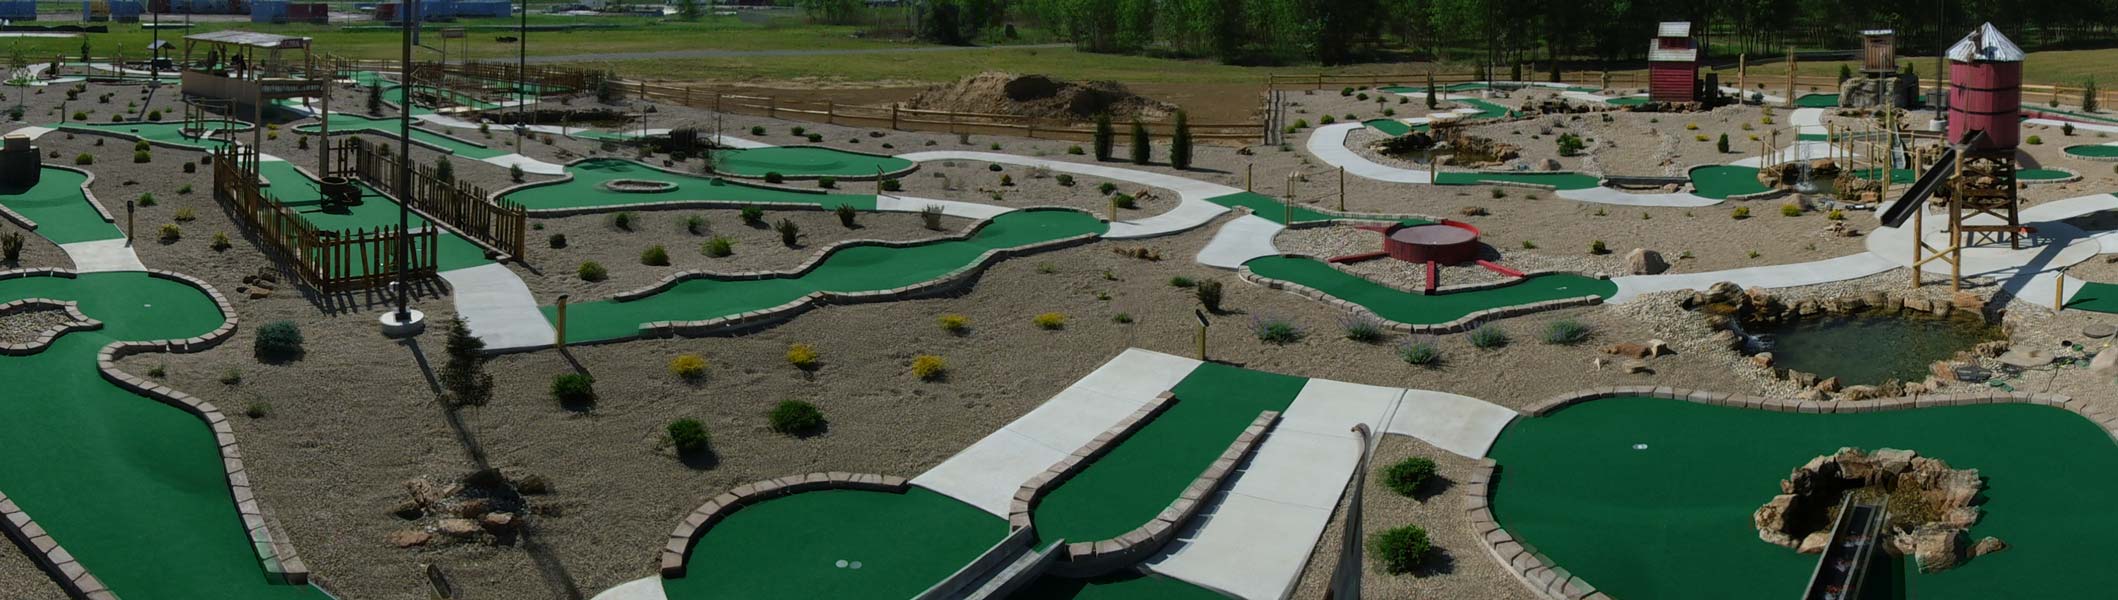 Concrete & Modular Mini Golf Courses - Adventure Golf & Sports